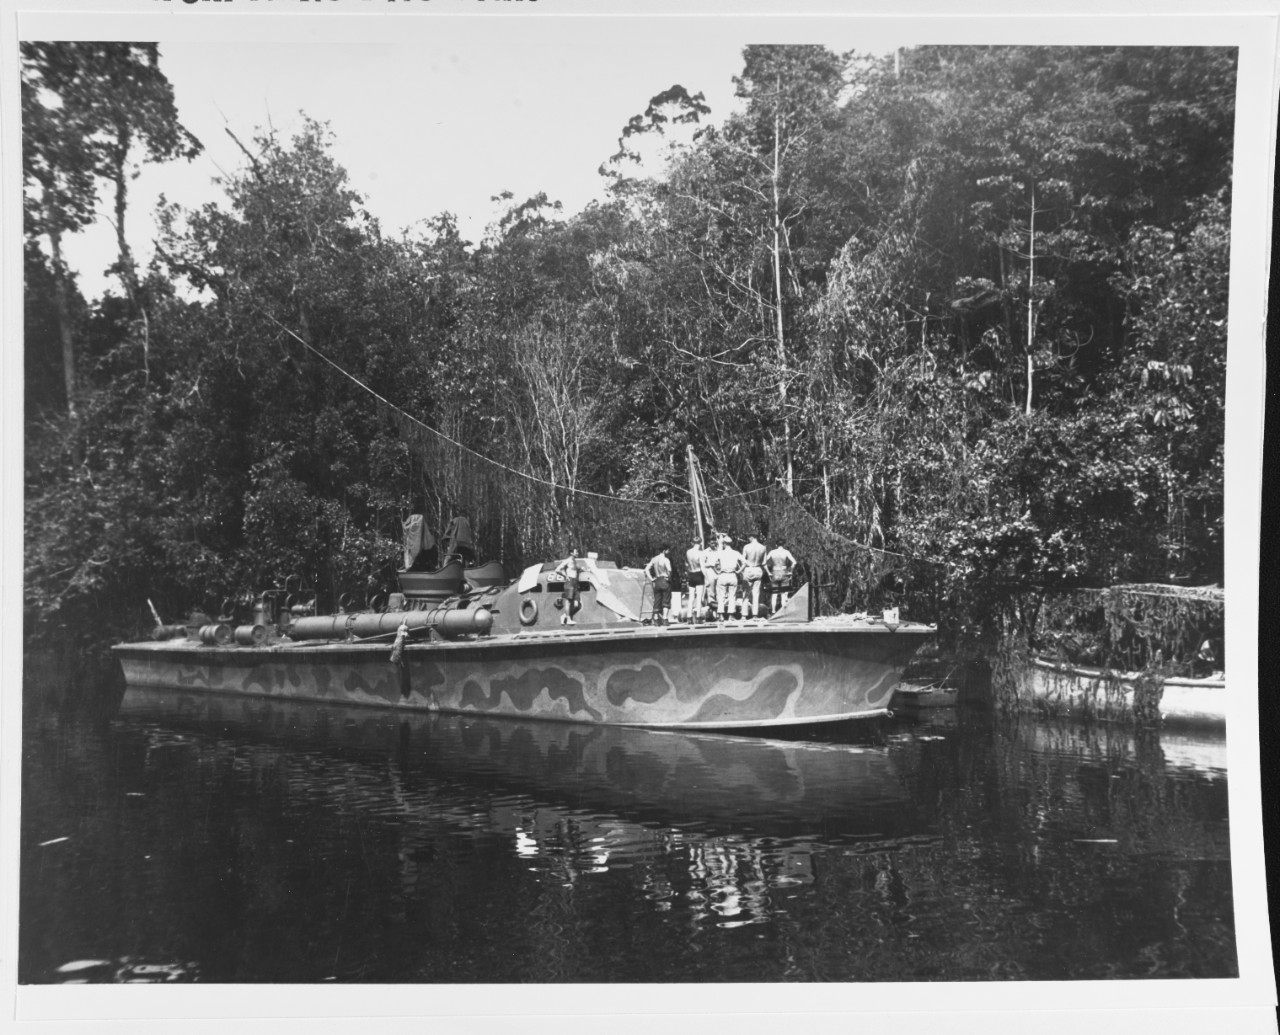 Morobe PT Boat Base, New Guinea